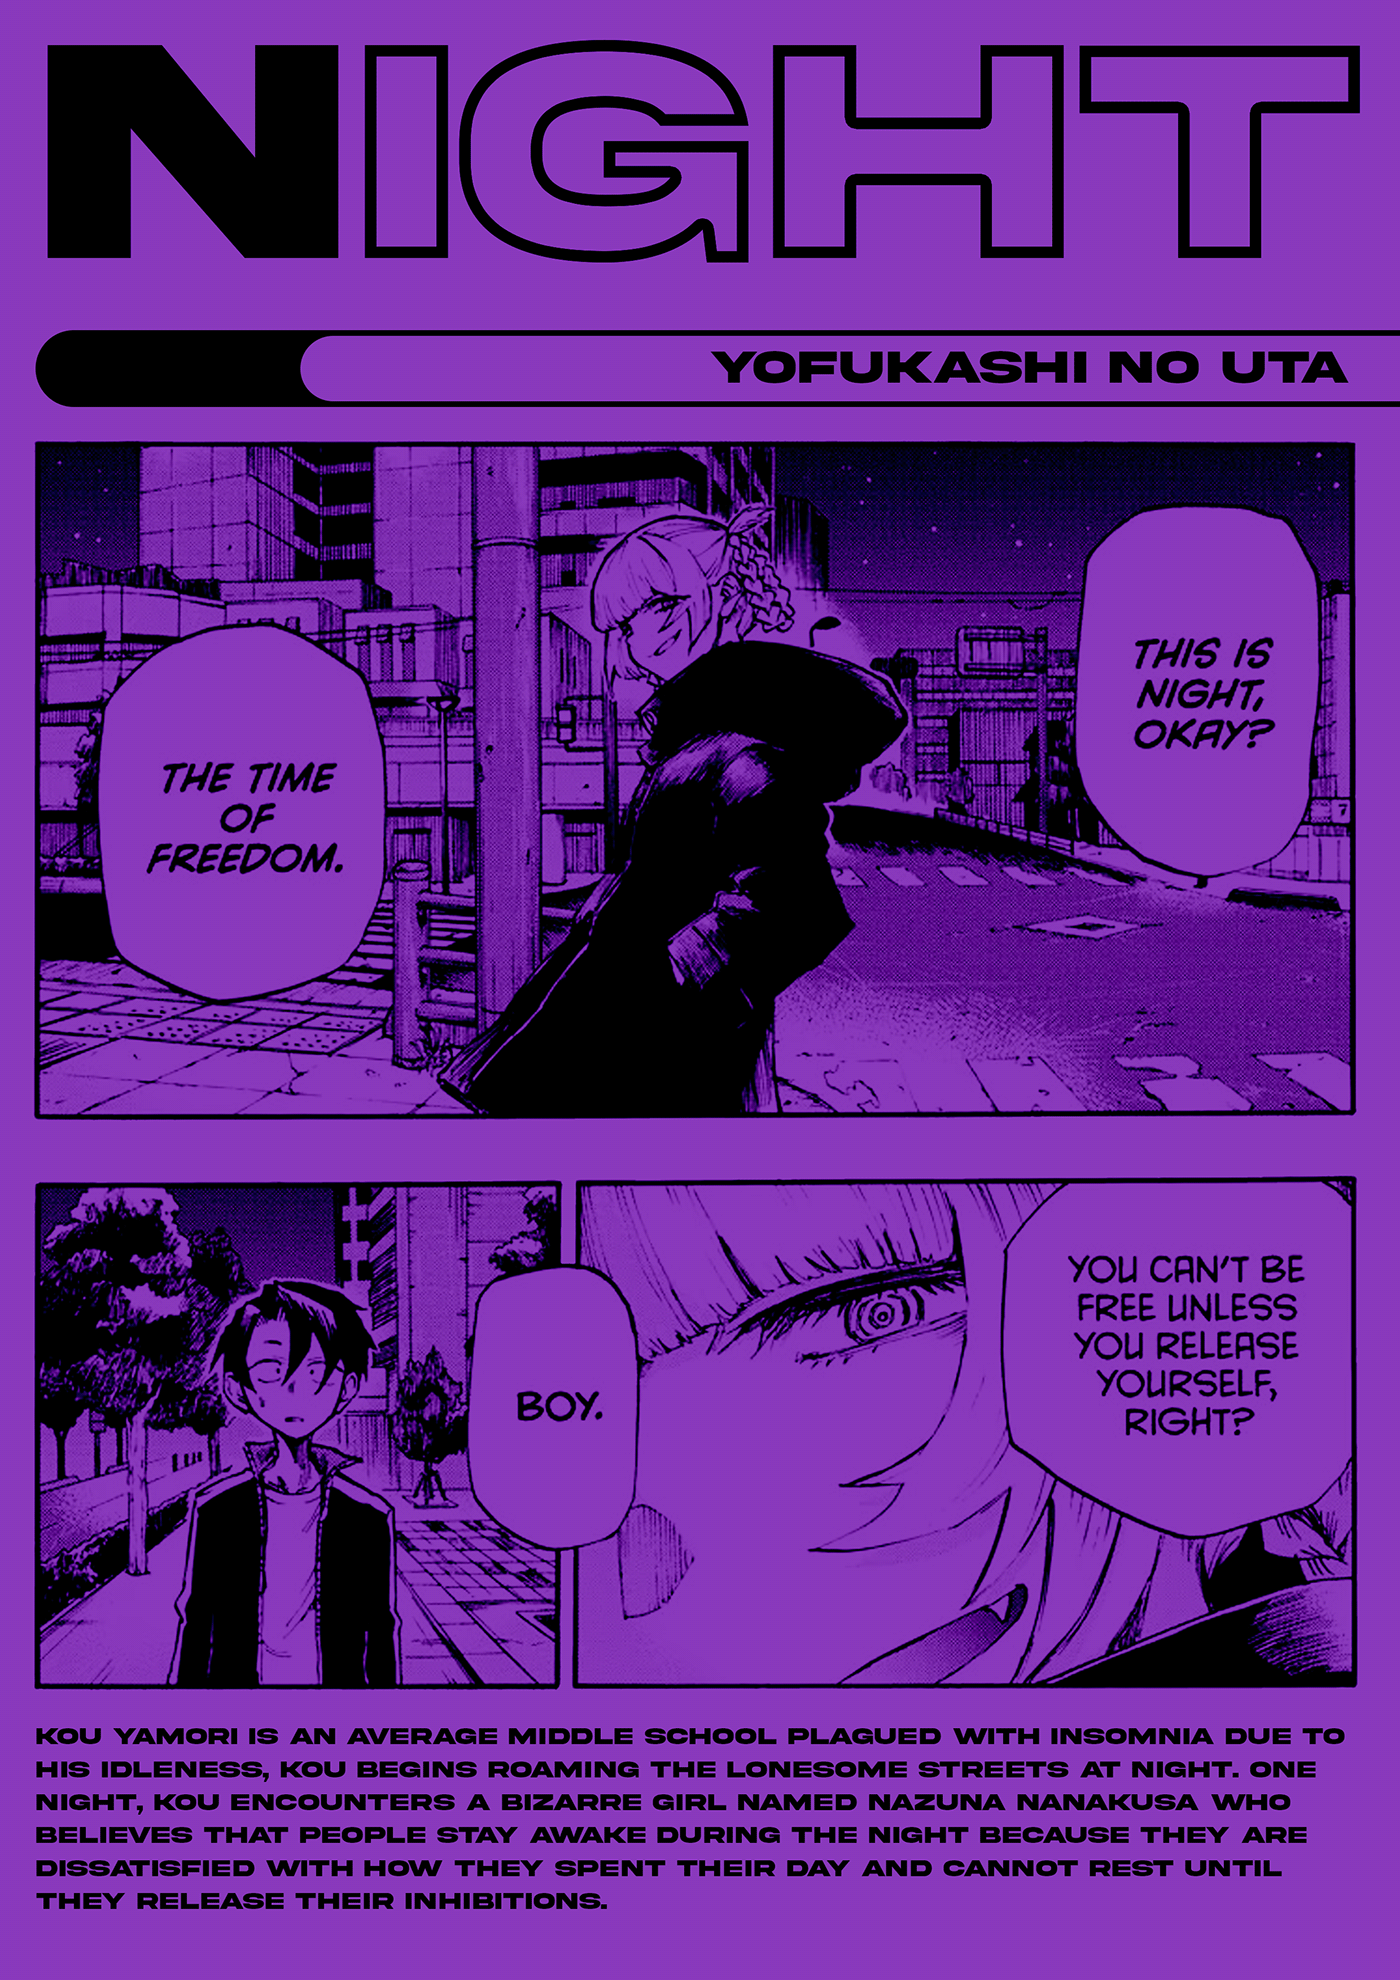 poster Poster Design manga Manga Style yofukashi no uta anime